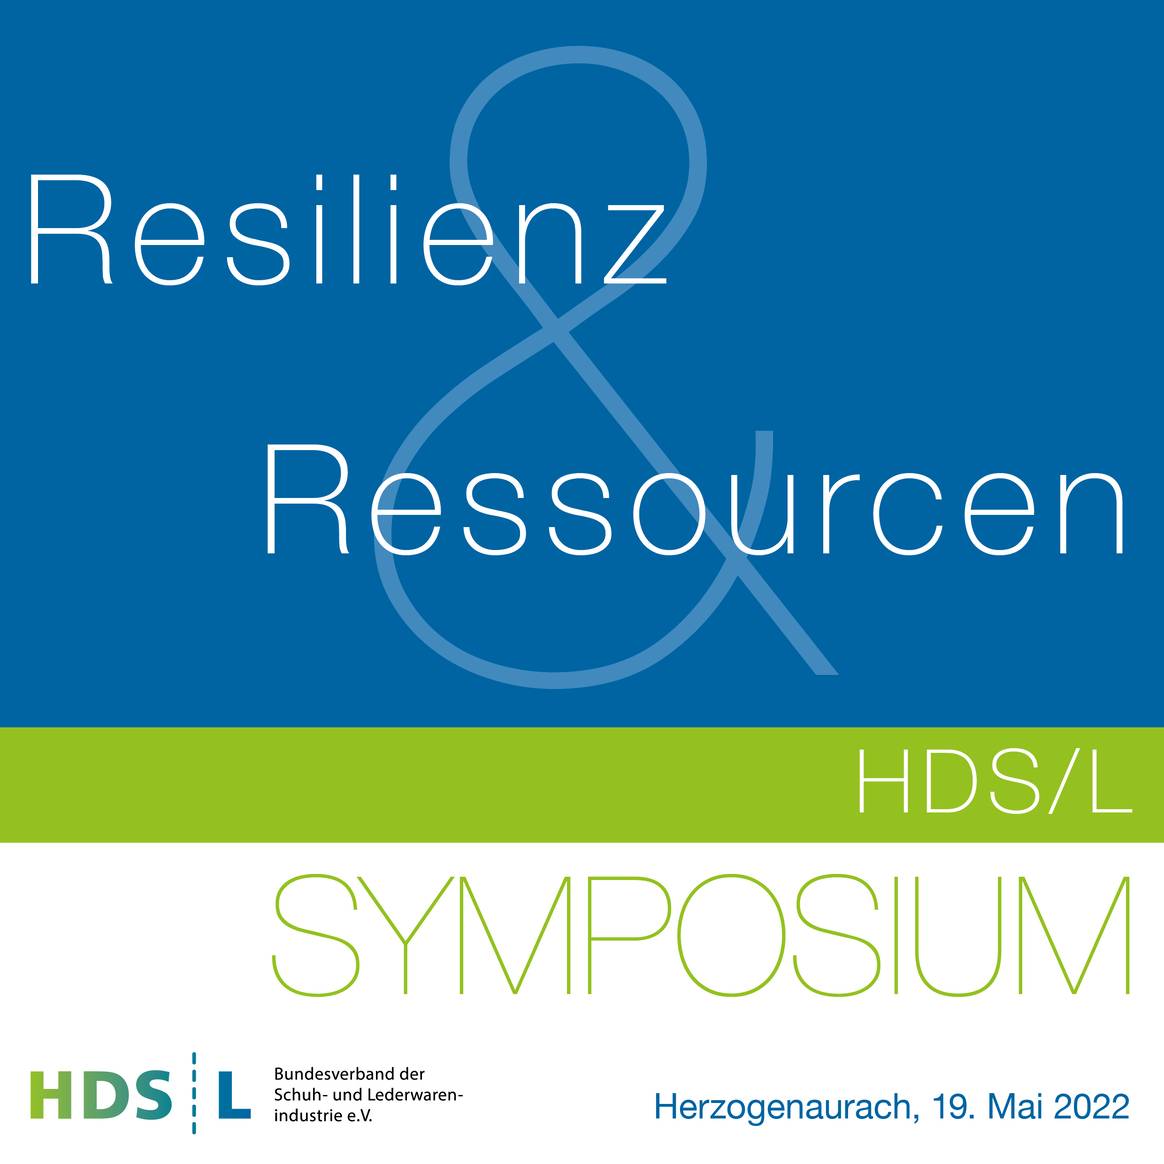 HDS/L Symposium am 19. Mai in Herzogenaurach